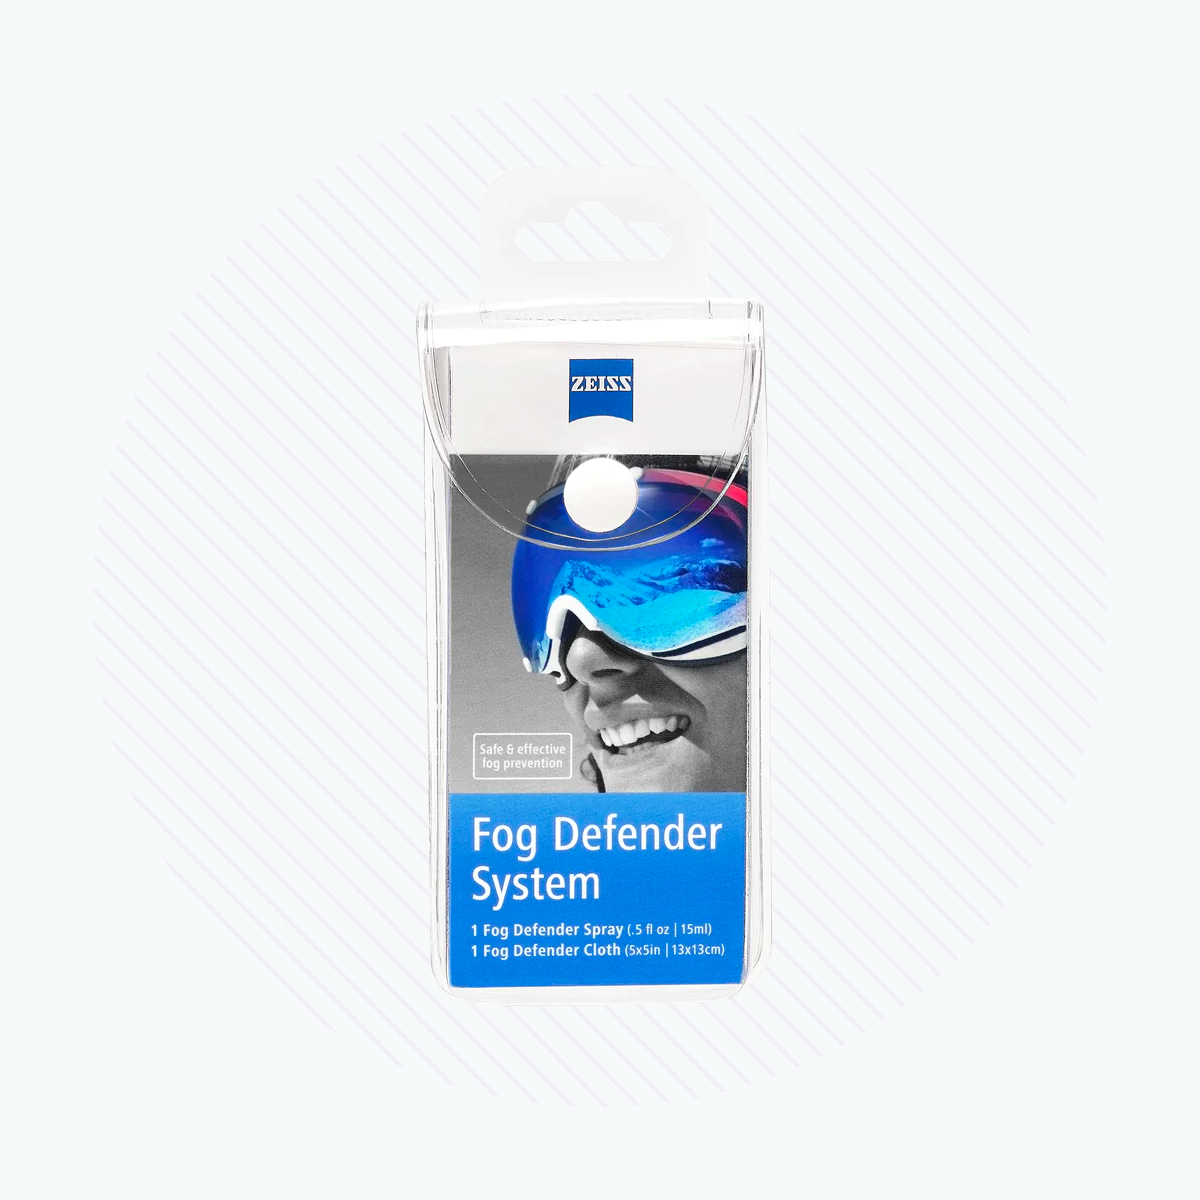 ZEISS Fog Defender System Anti-Fog Spray for Glasses – 1 Spray Bottle and 1 Microfiber Cloth